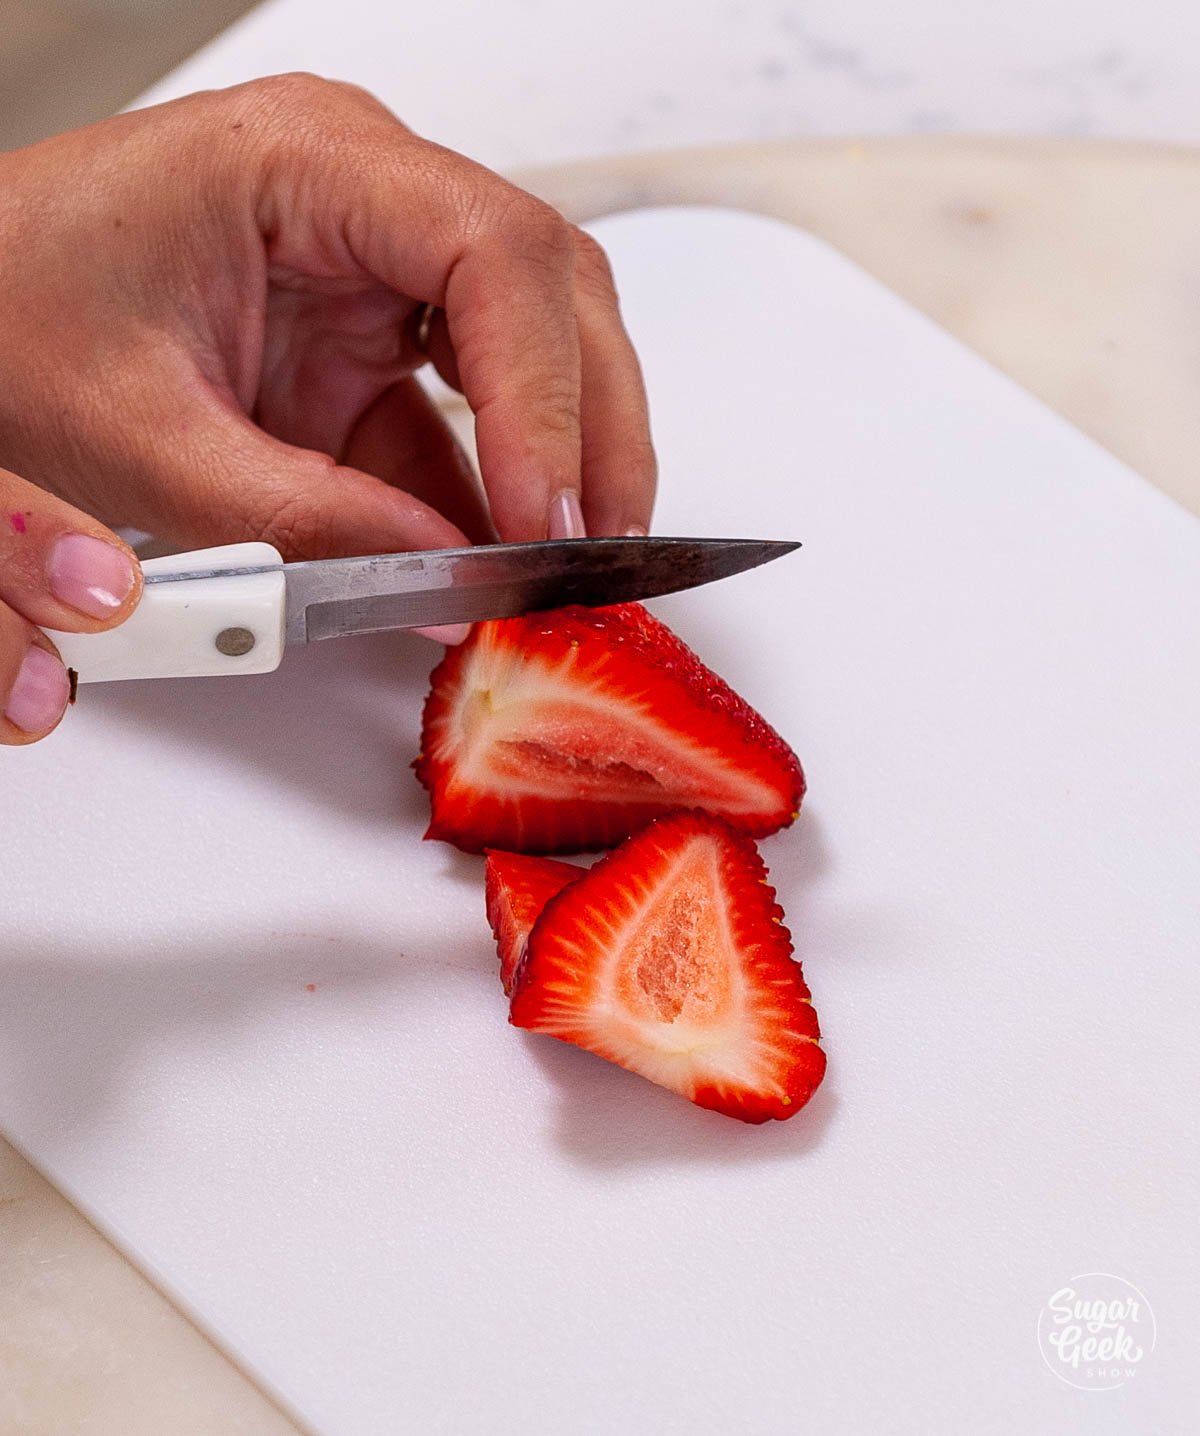 slicing strawberries